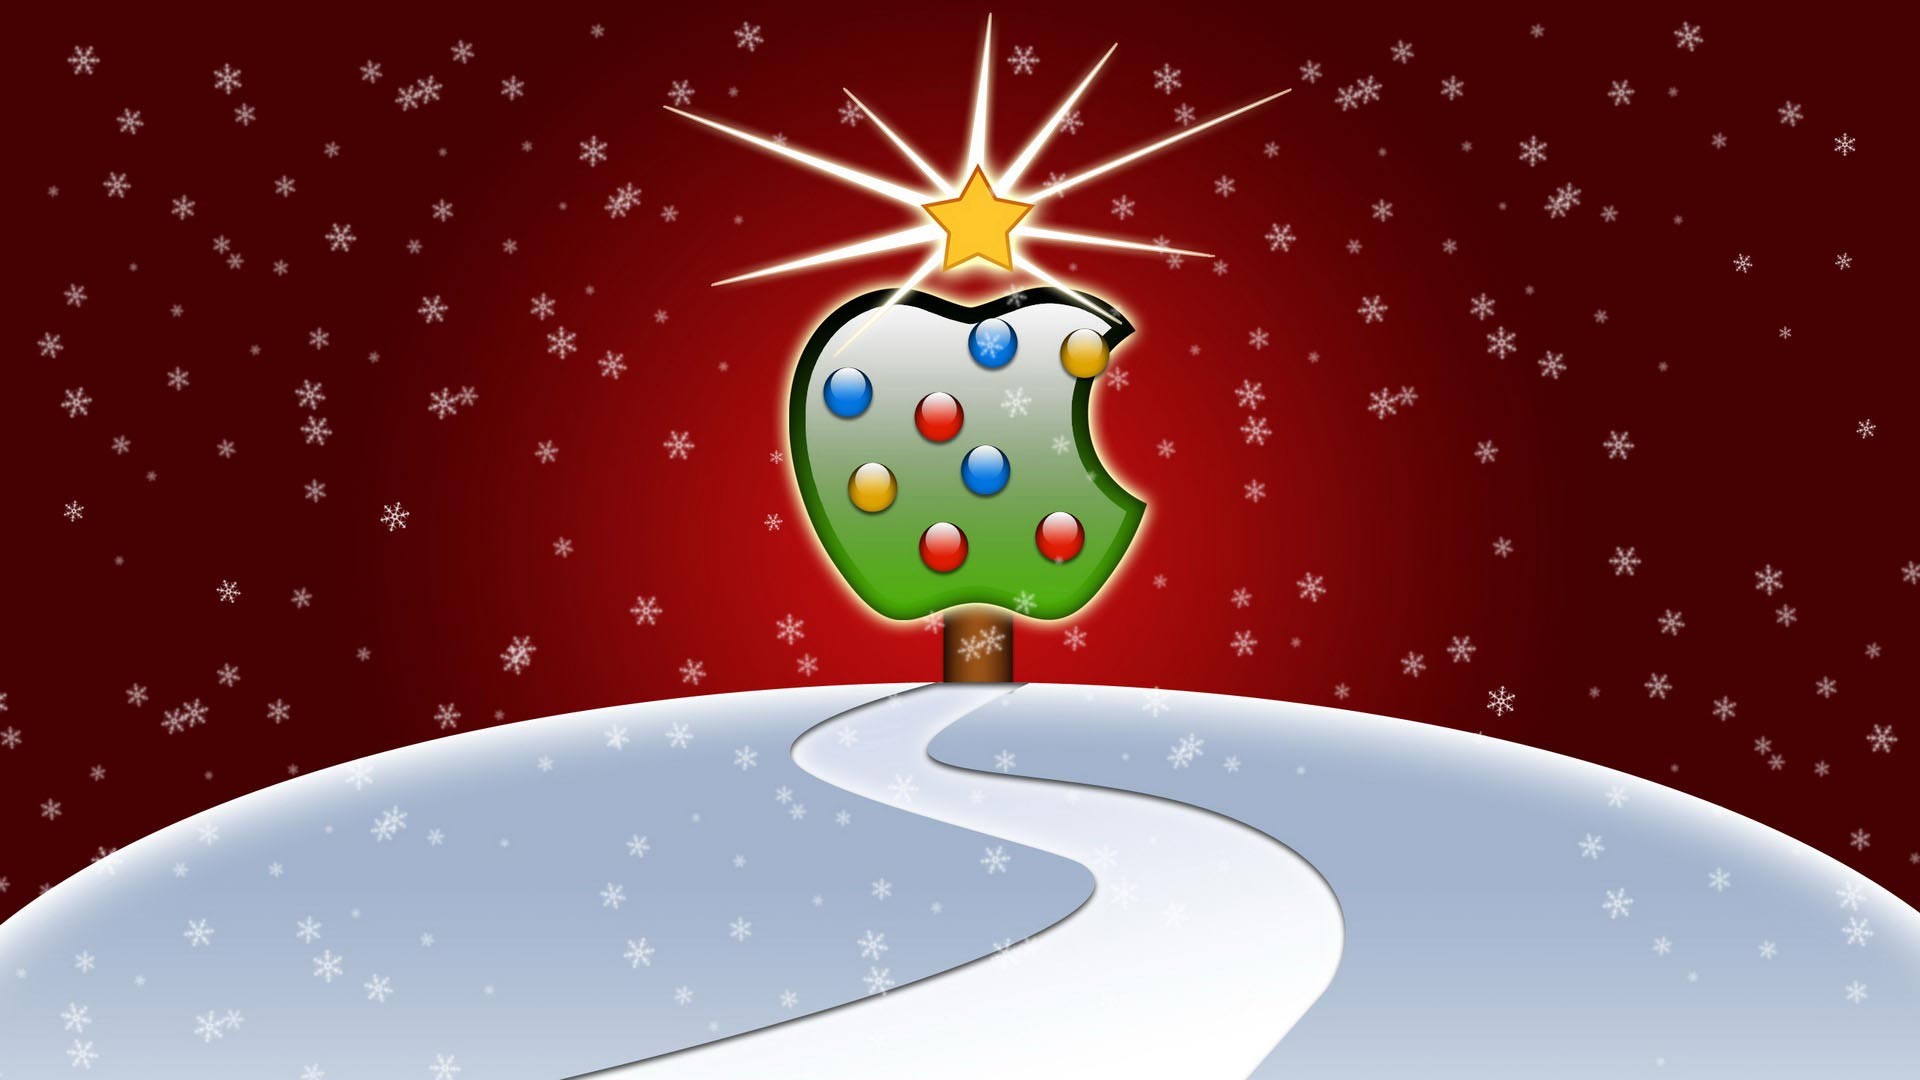 Animated Background Holiday Desktop Mac Christmas Apple Wallpaper